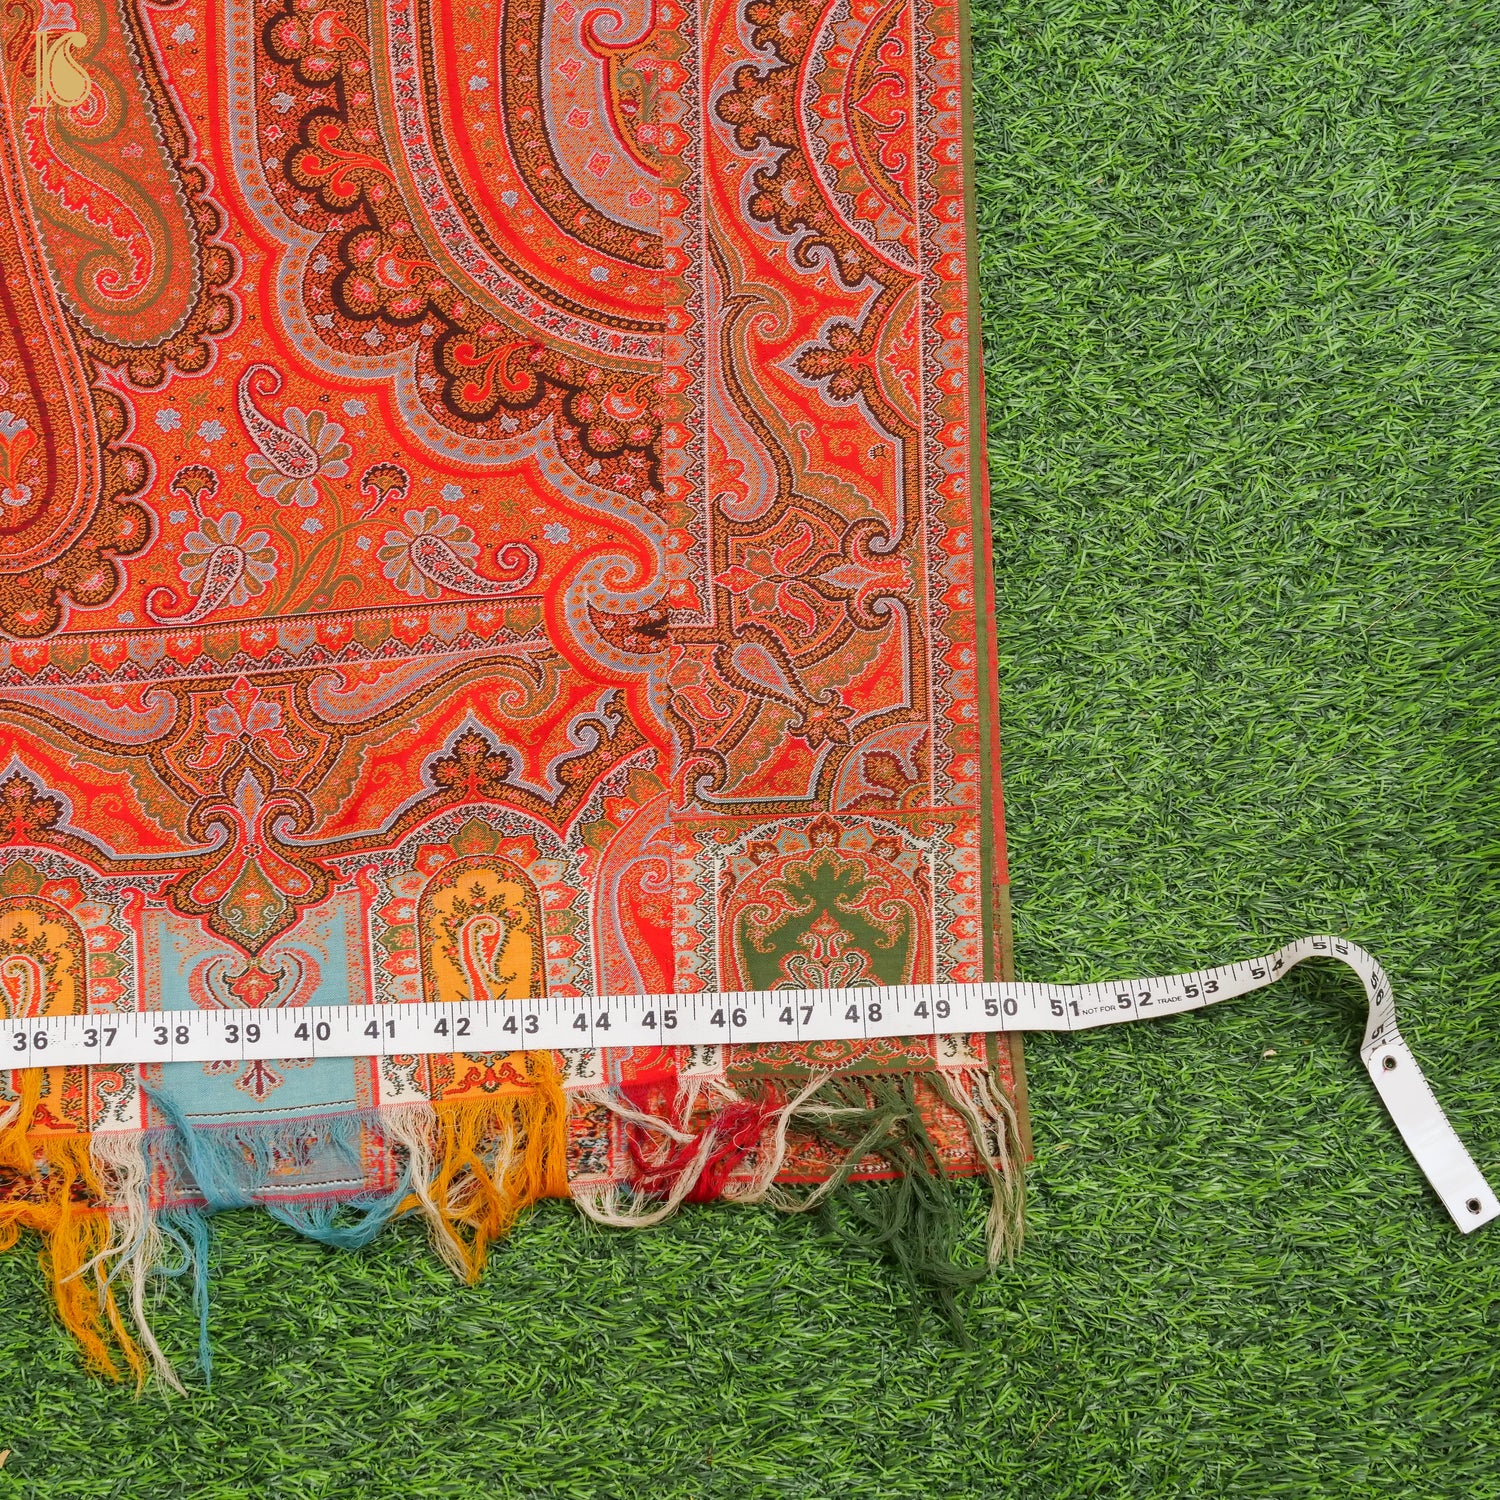 Red Pure Pashmina Handwoven Antique Kani Embriodery Kashmiri Shawl - Khinkhwab